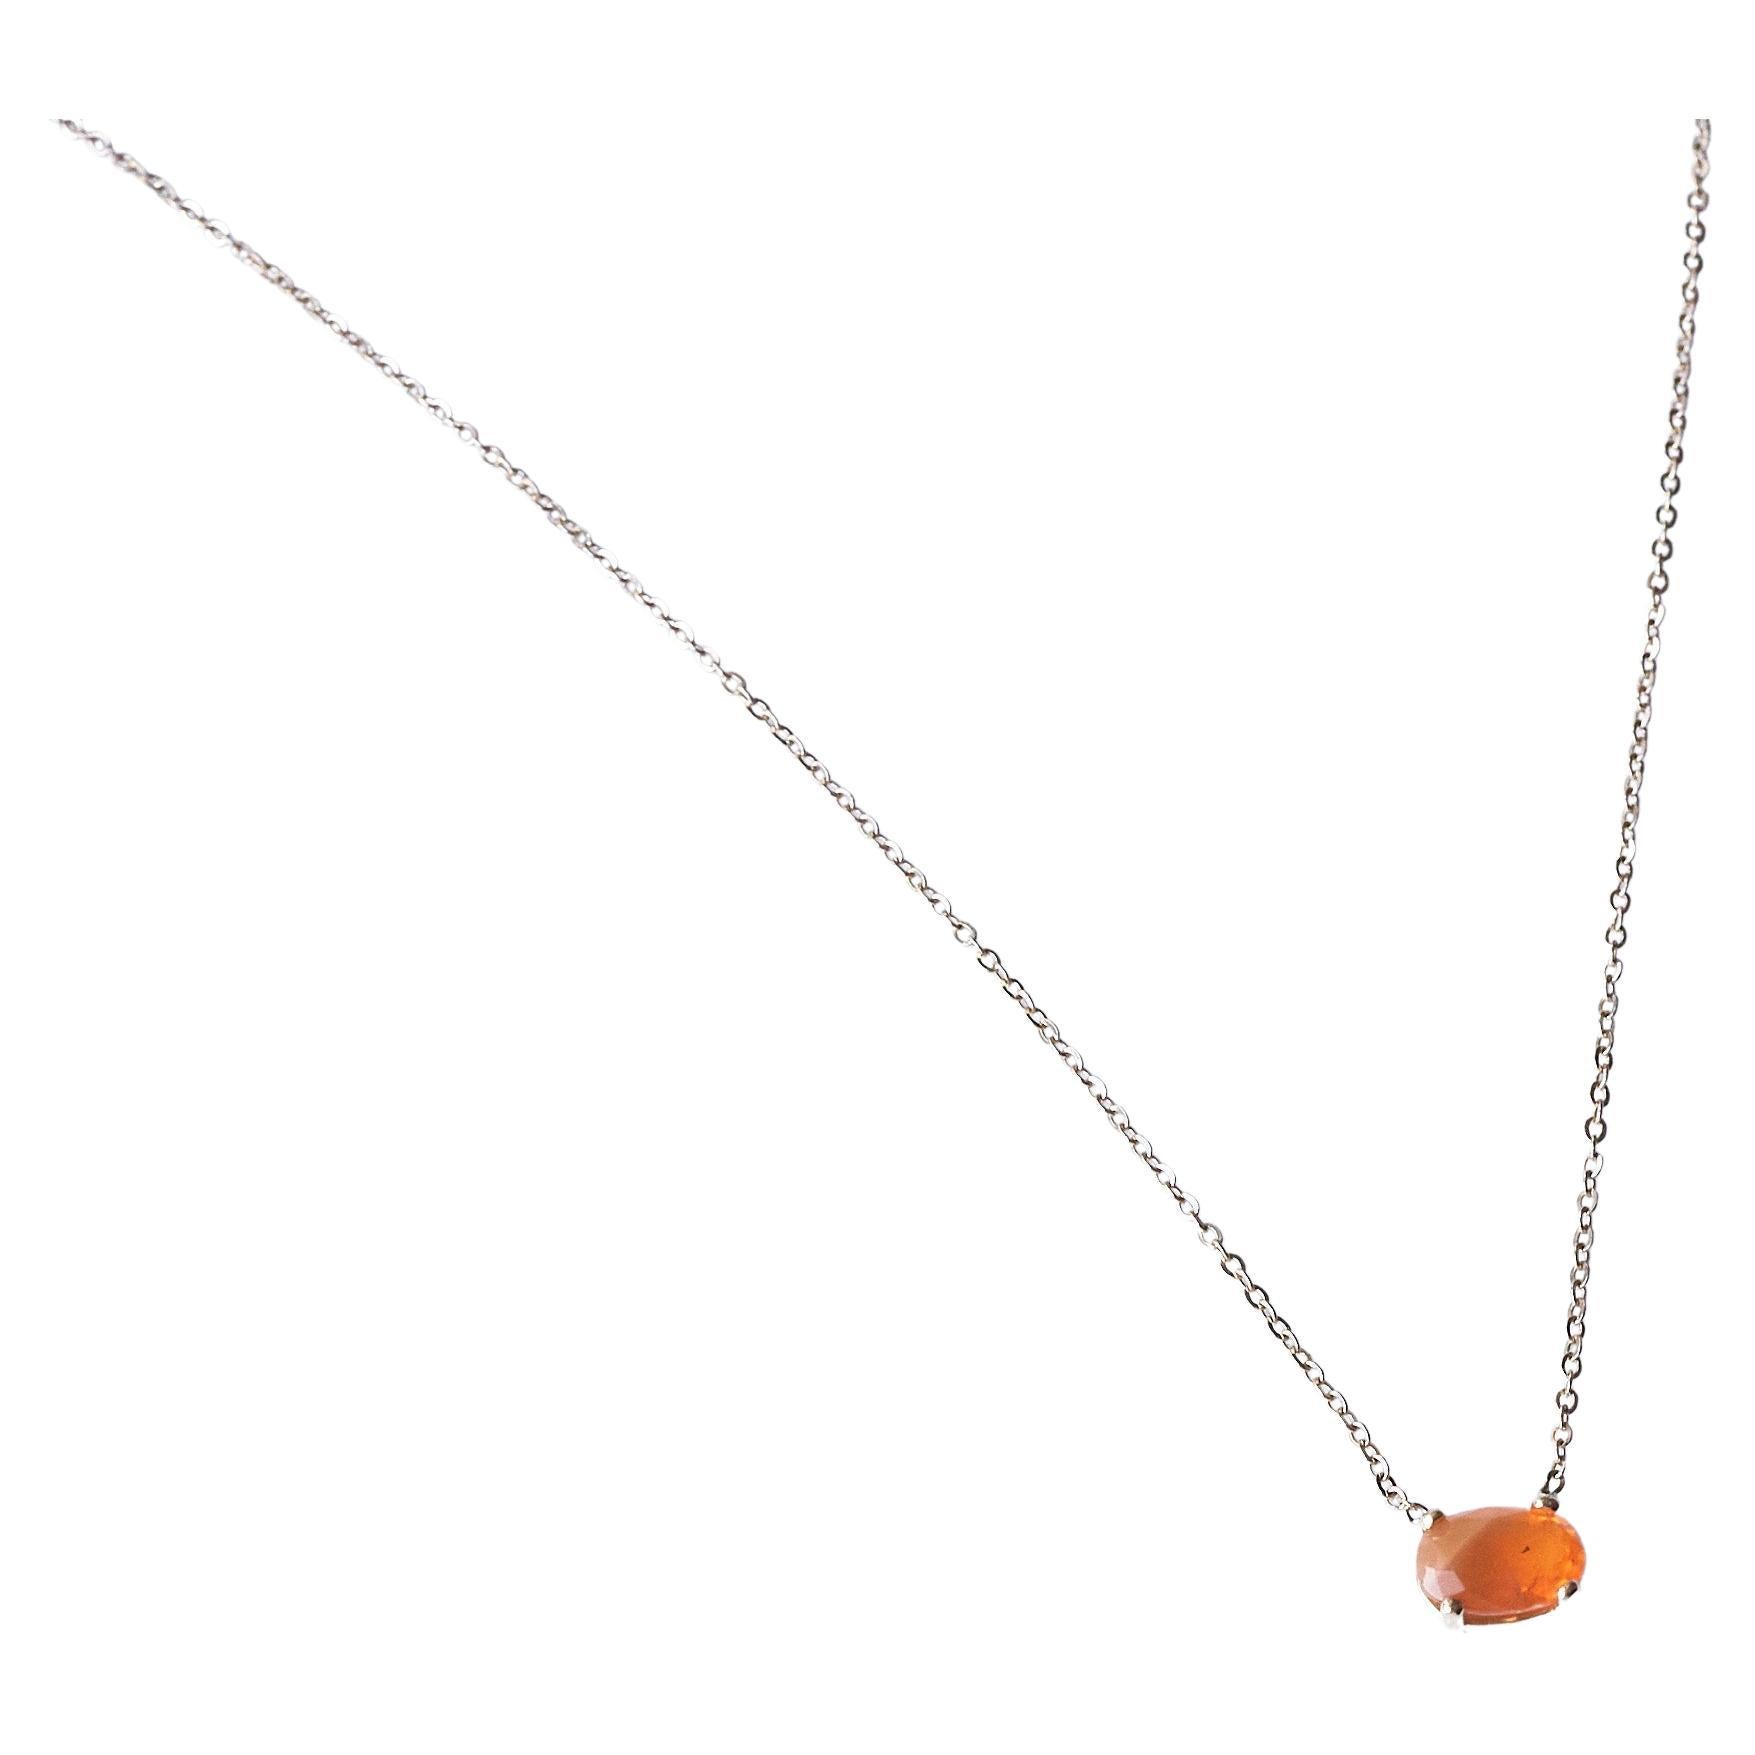 Gem Chain Necklace Choker Fire Opal 14k Gold J Dauphin
Metal 14 k gold
Length: Adjustable 16